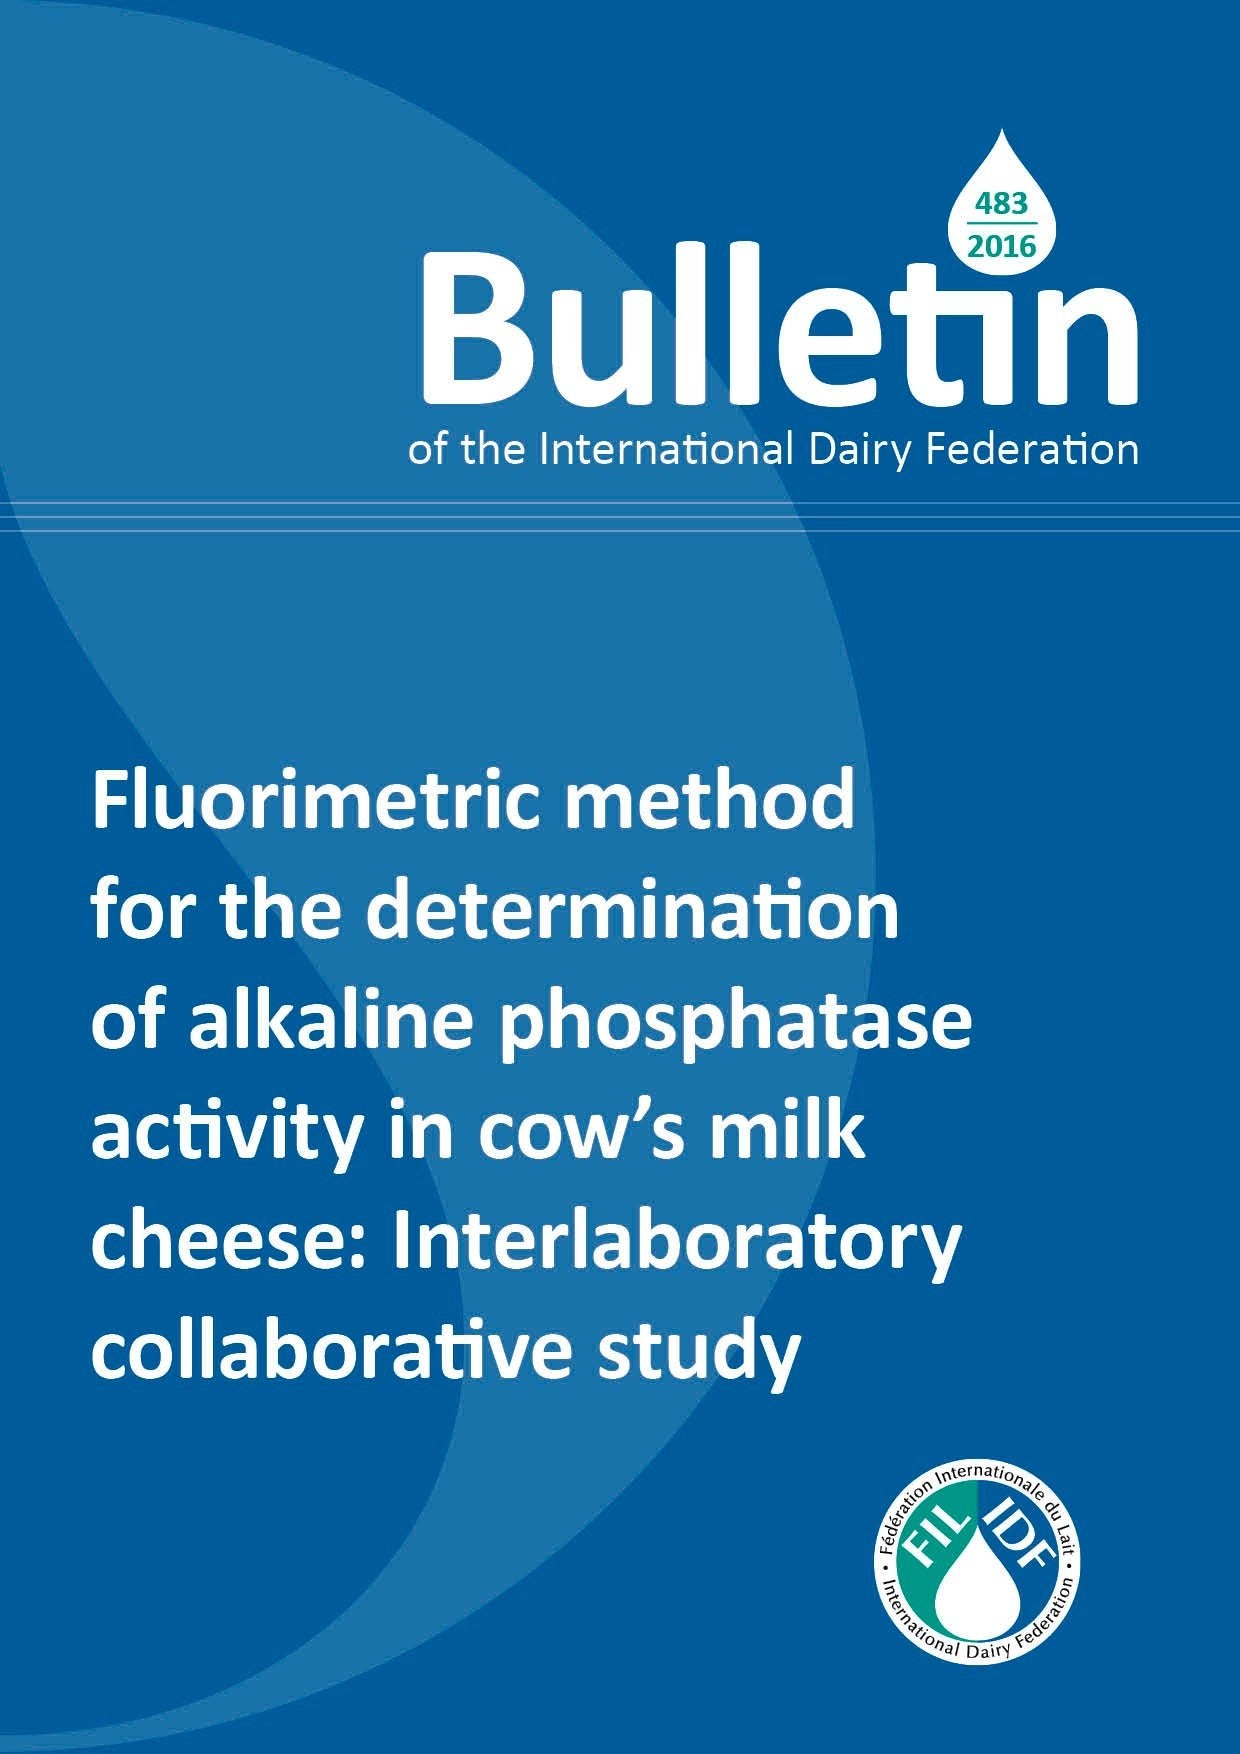 Bulletin of the IDF N° 483/2016: Fluorimetric method for the determination of alkaline phosphatase activity in cow's milk cheese: Interlaboratory collaborative study - FIL-IDF